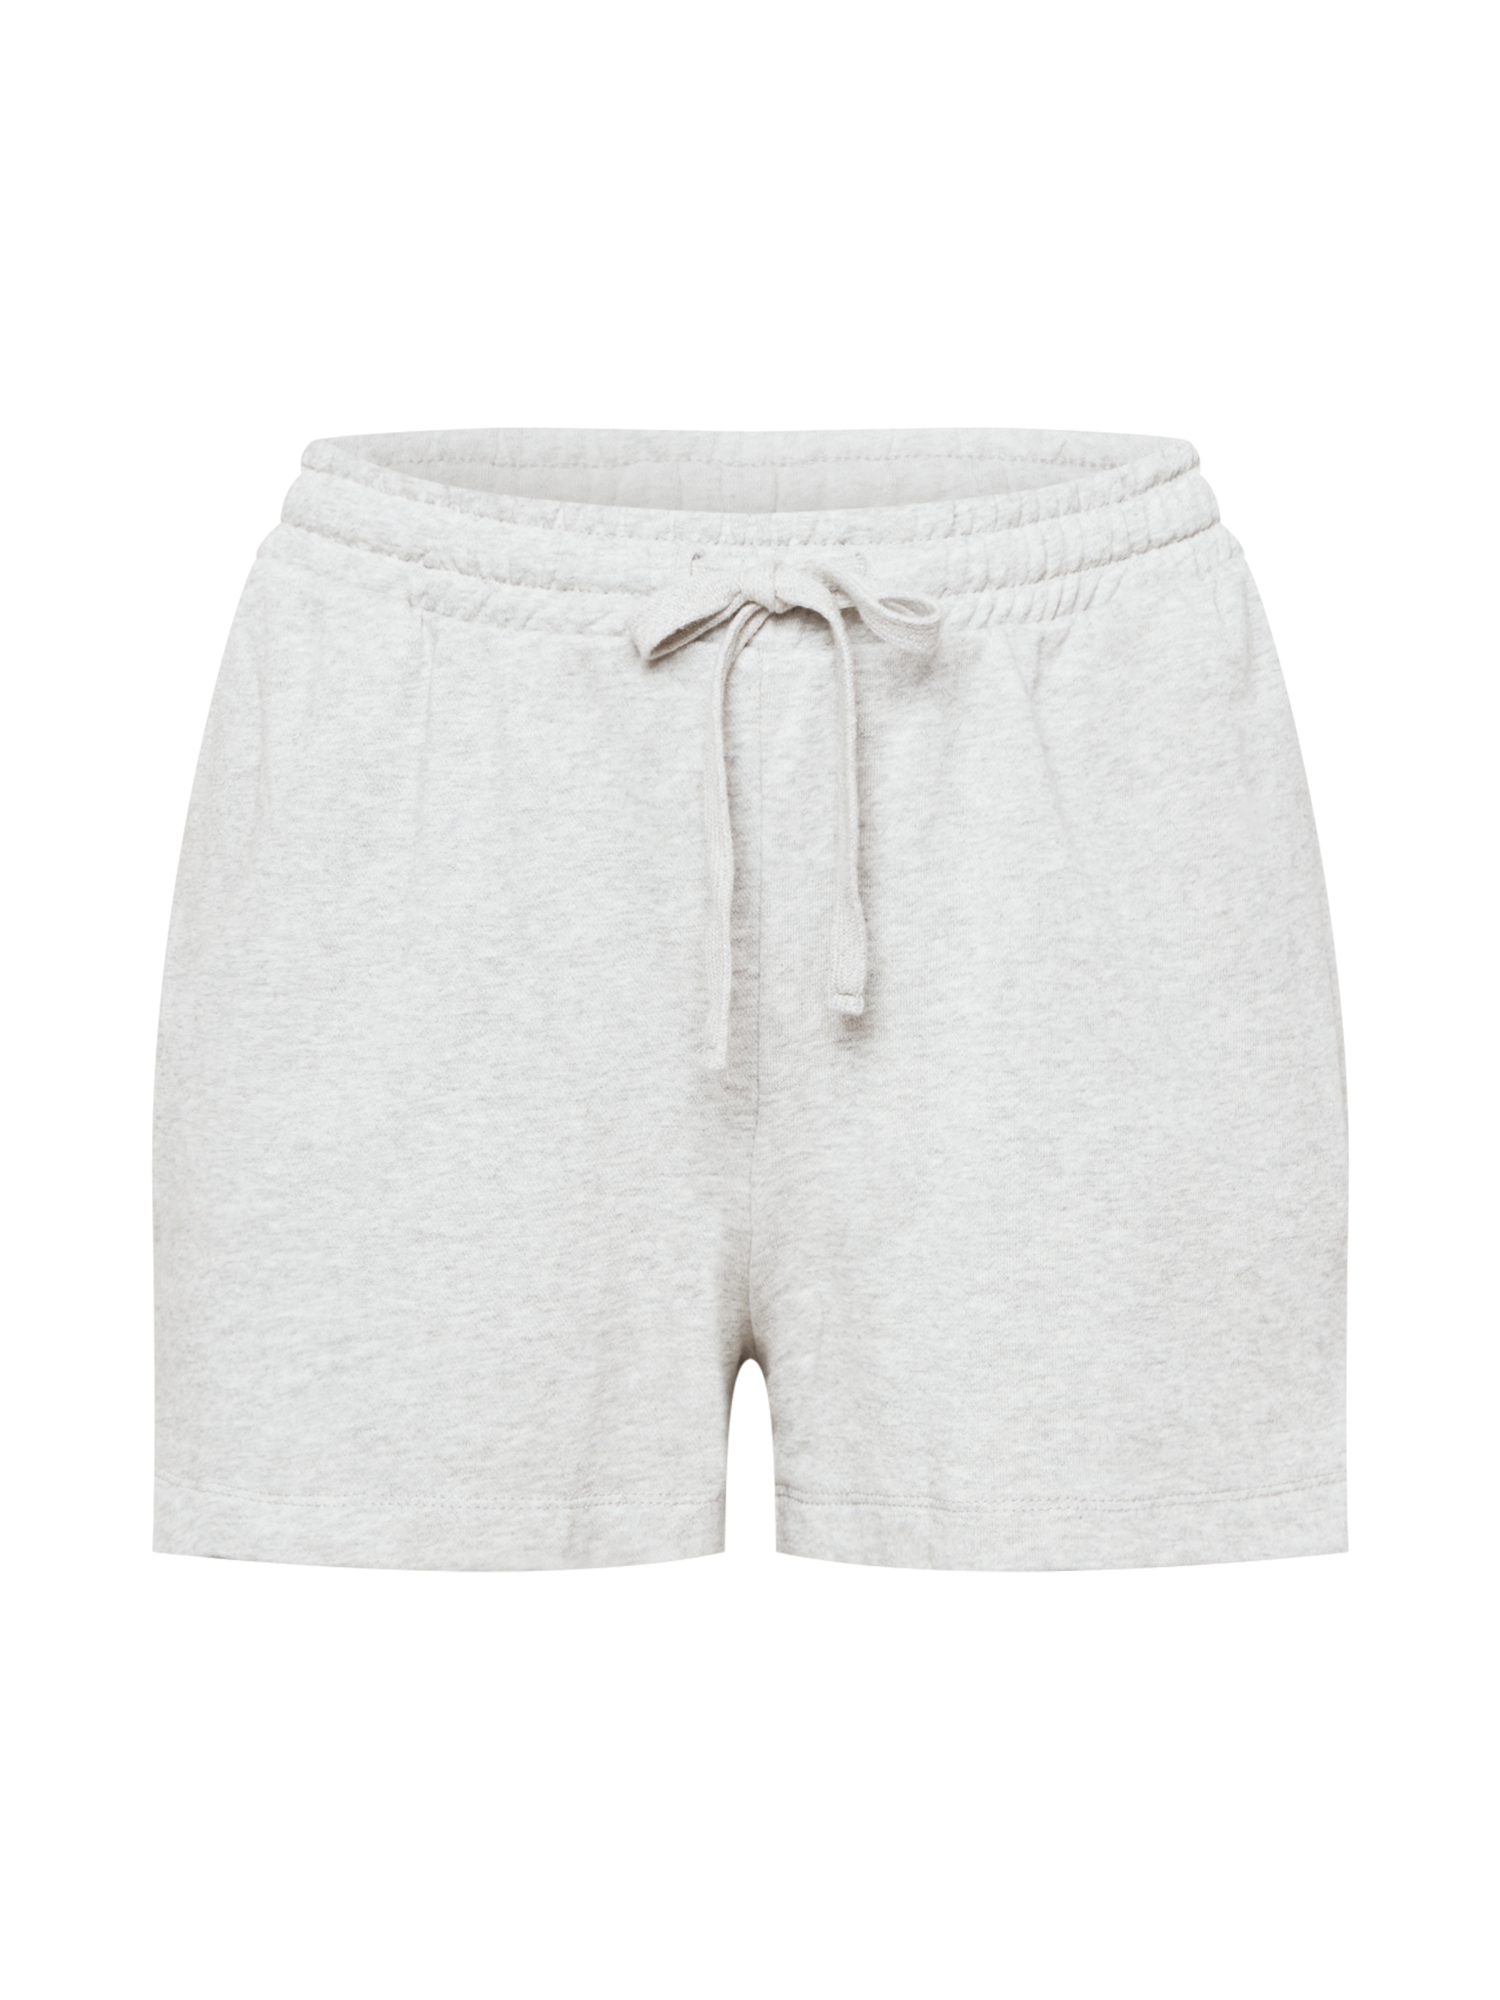 nMSsY Taglie comode Cotton On Curve Pantaloni in Grigio Chiaro 